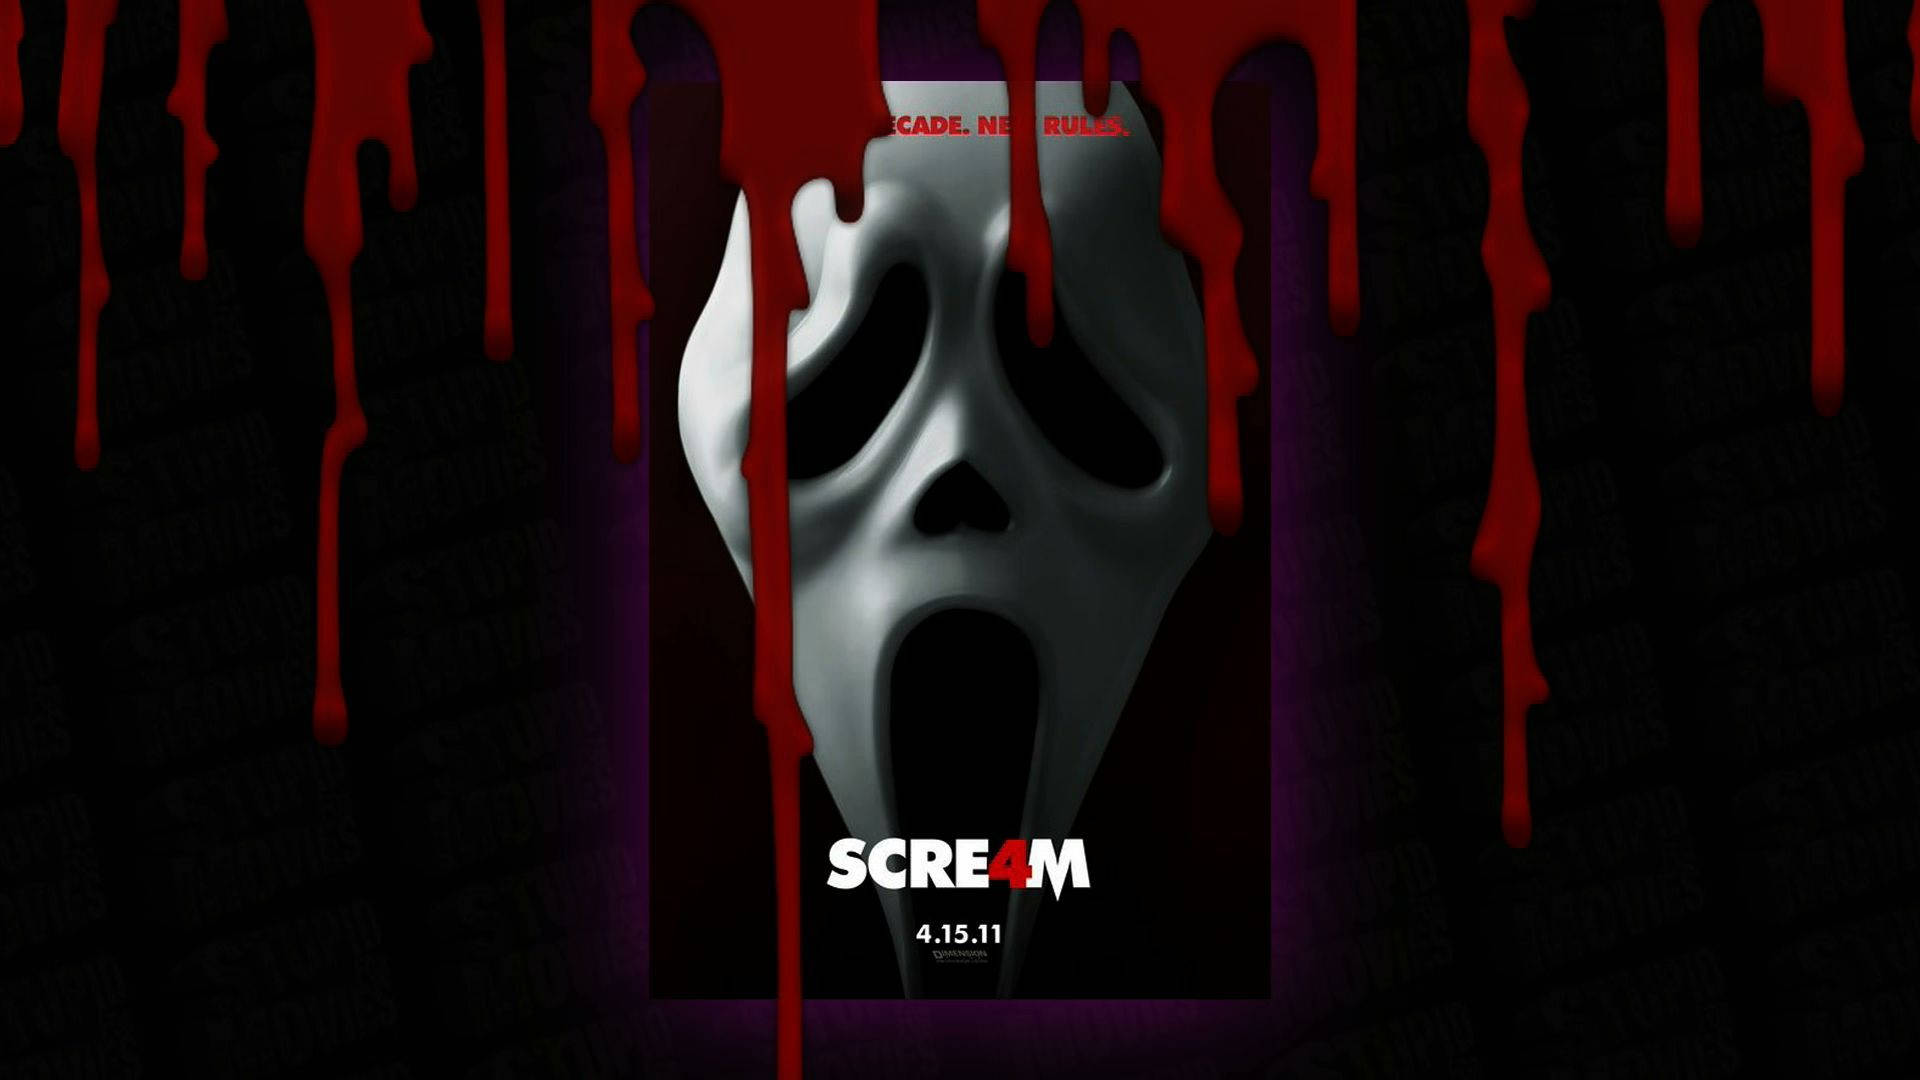 Scream Dripping Blood Poster Wallpaper